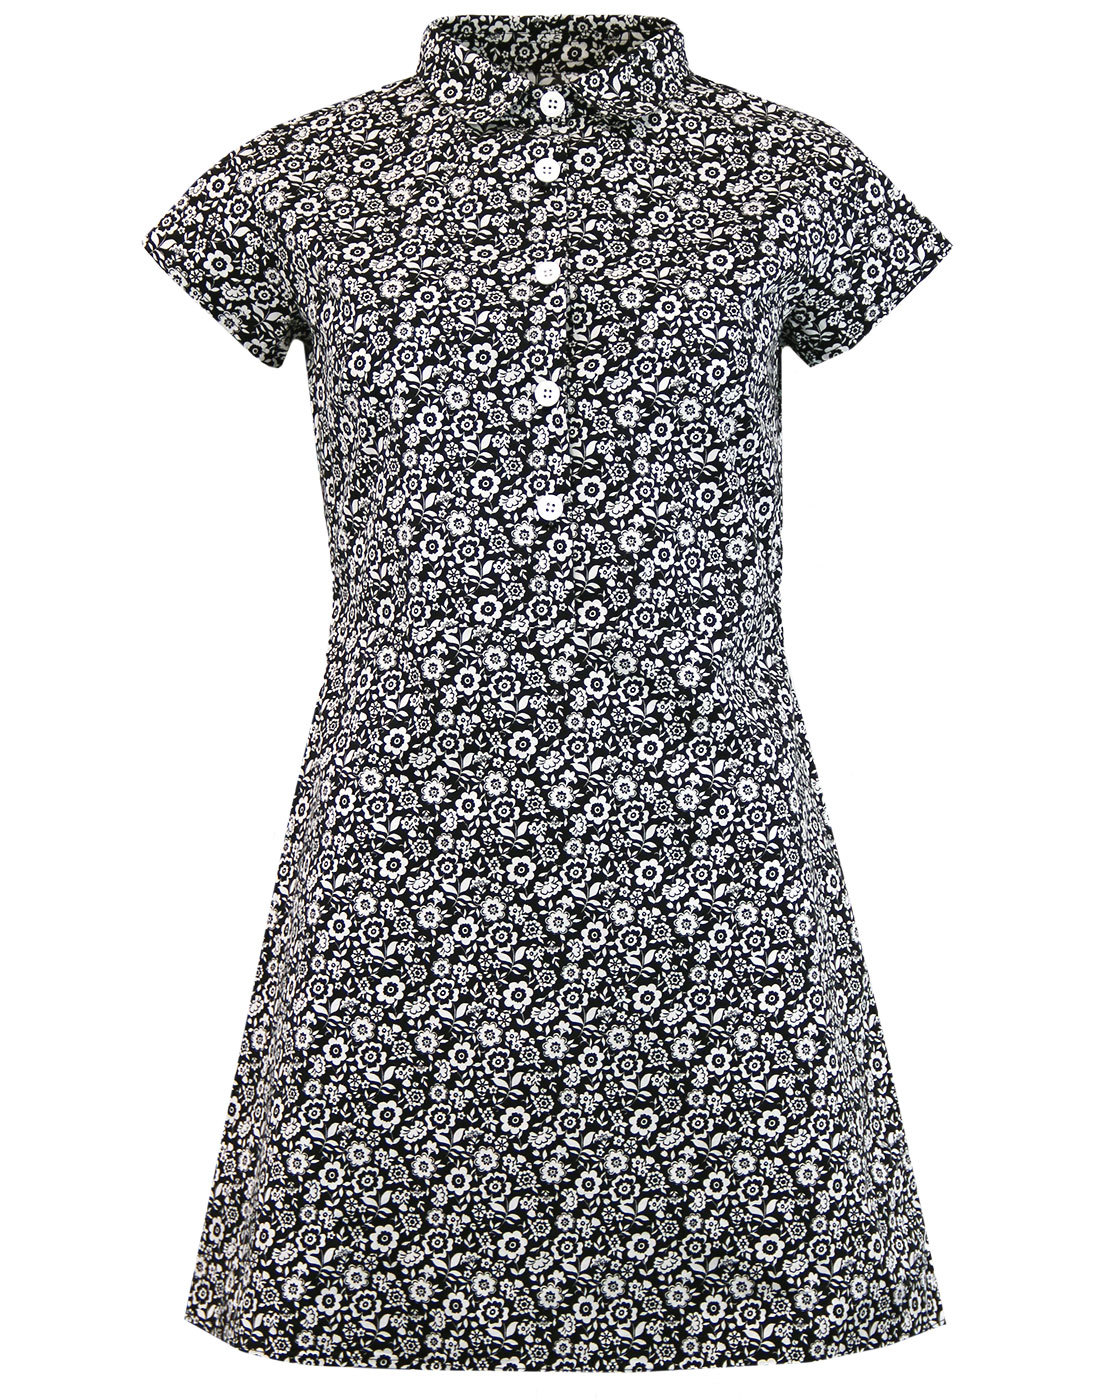 Jane MADCAP ENGLAND 1960s Mod Floral Shirt Dress